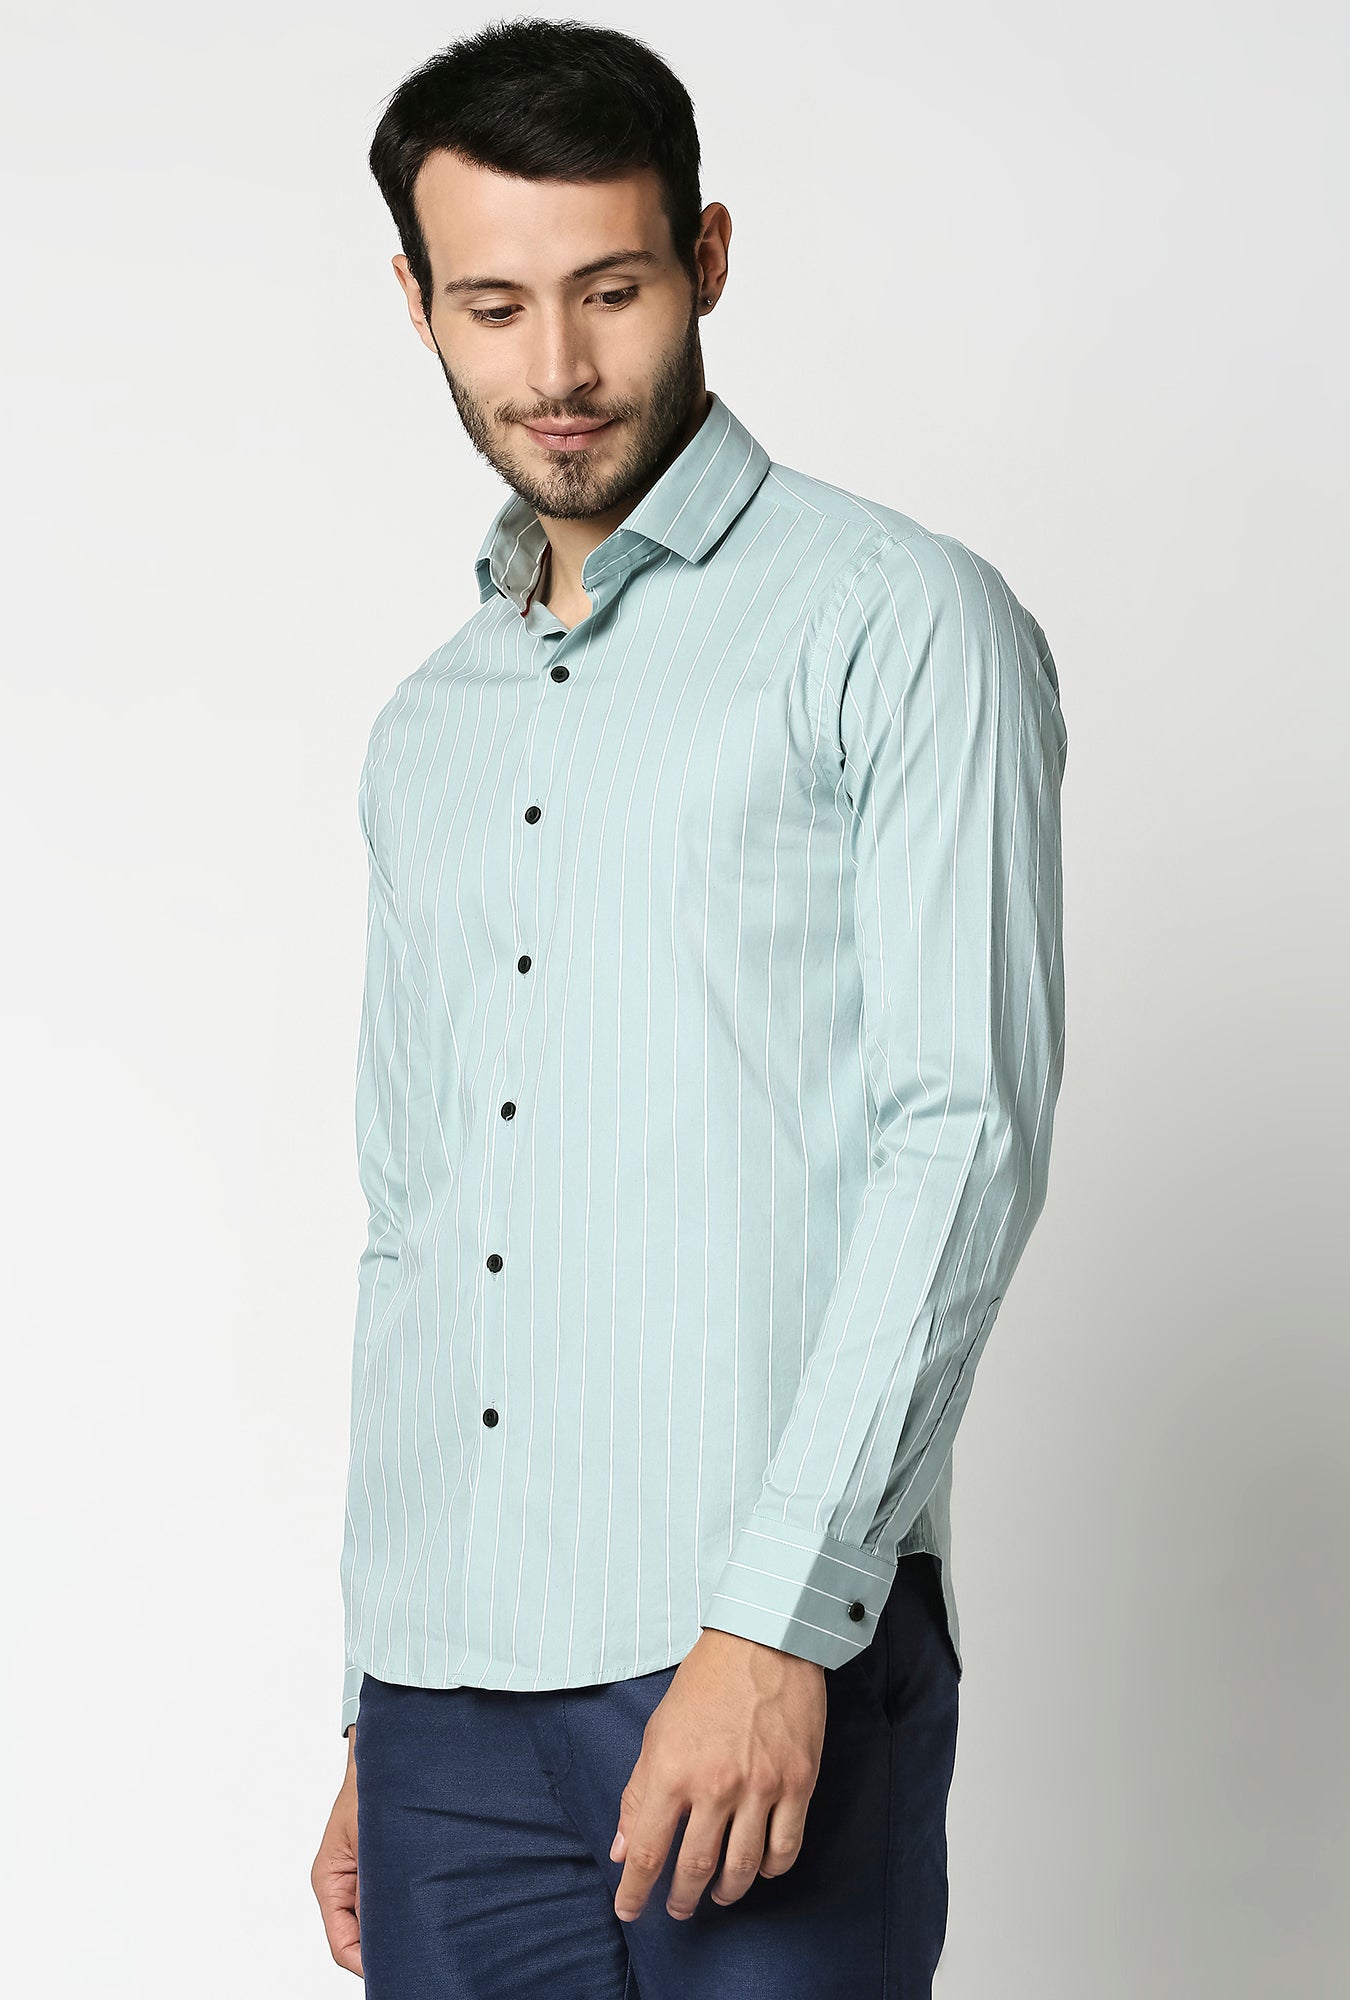 Fostino Stripes Pista Full Sleeves Shirt - Fostino - Shirts